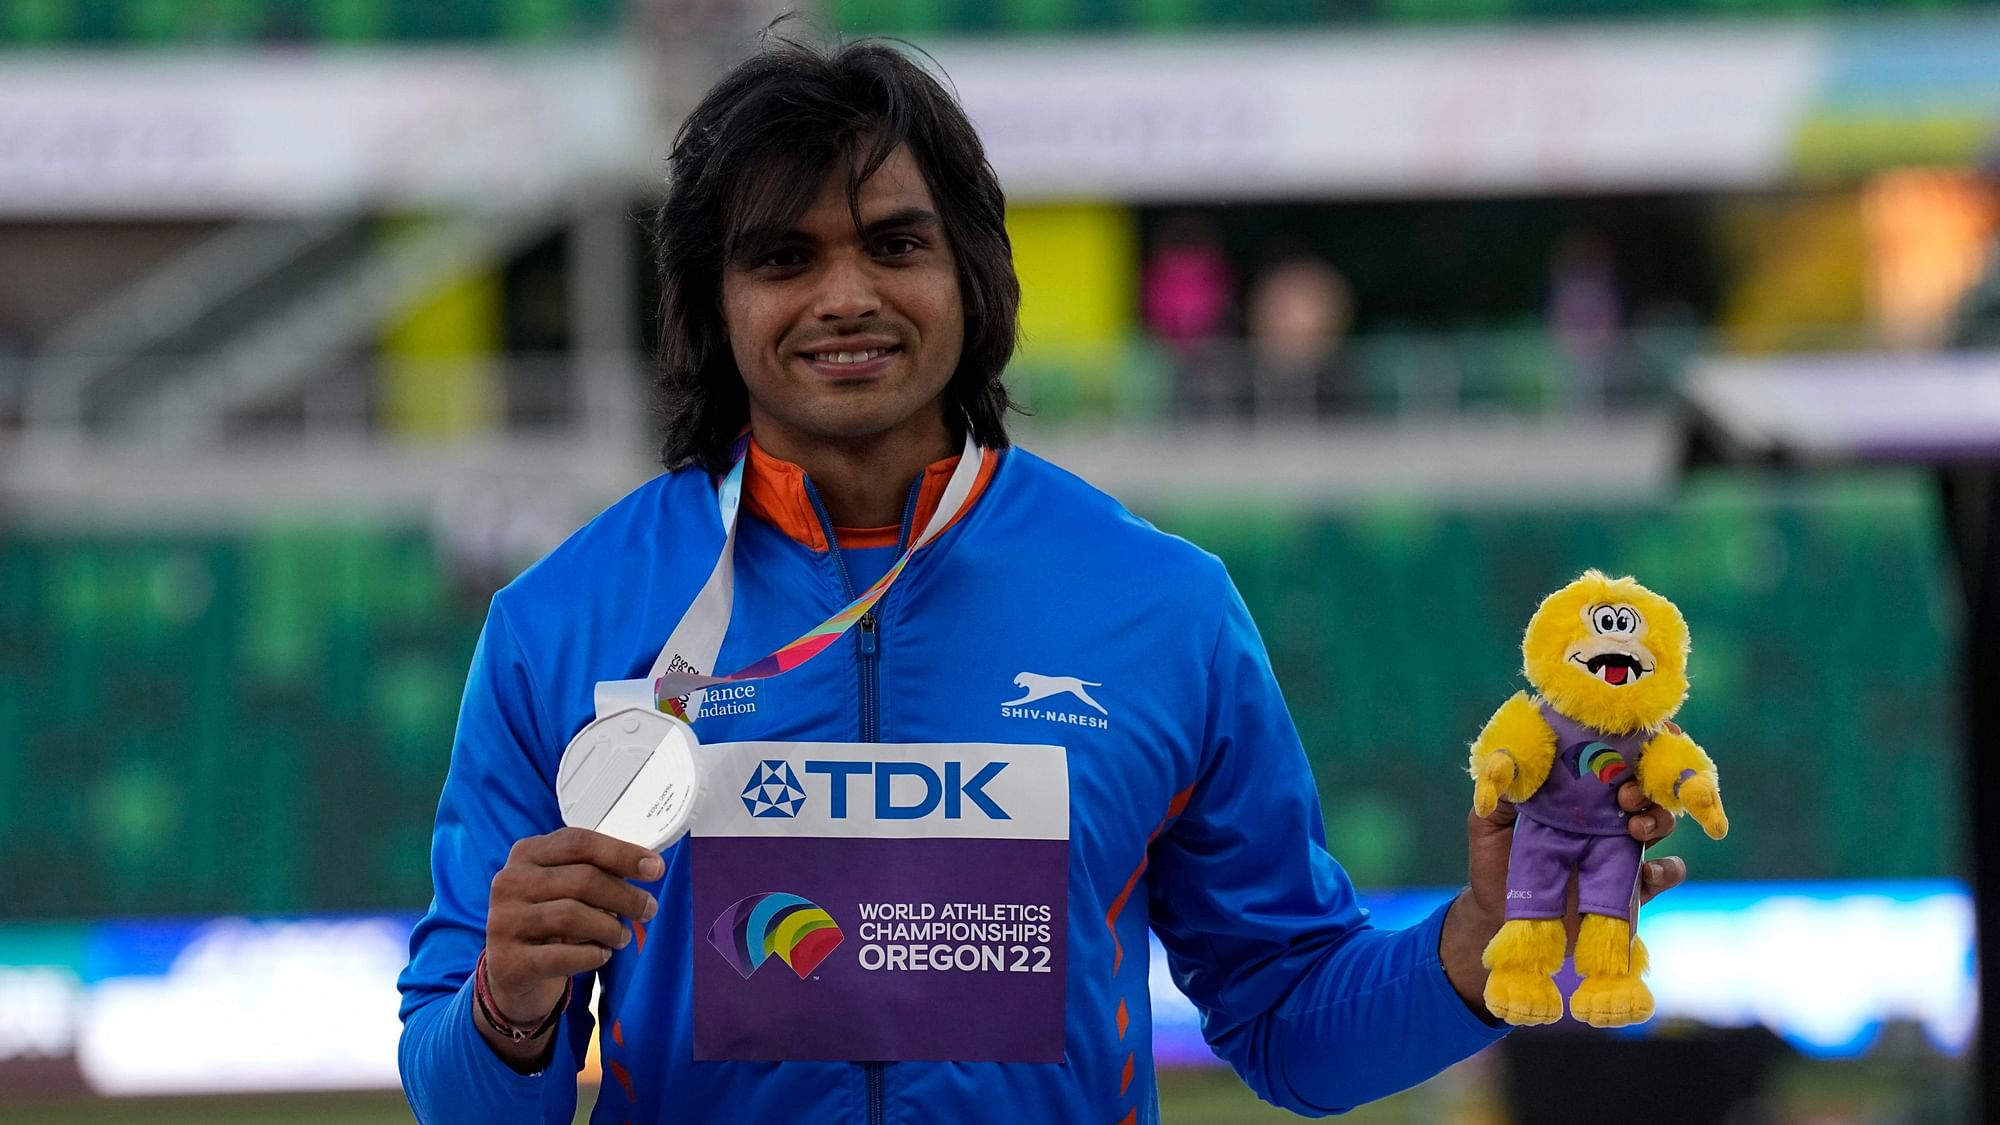 Neeraj Chopra Wins Silver Medal at World Athletics Championships